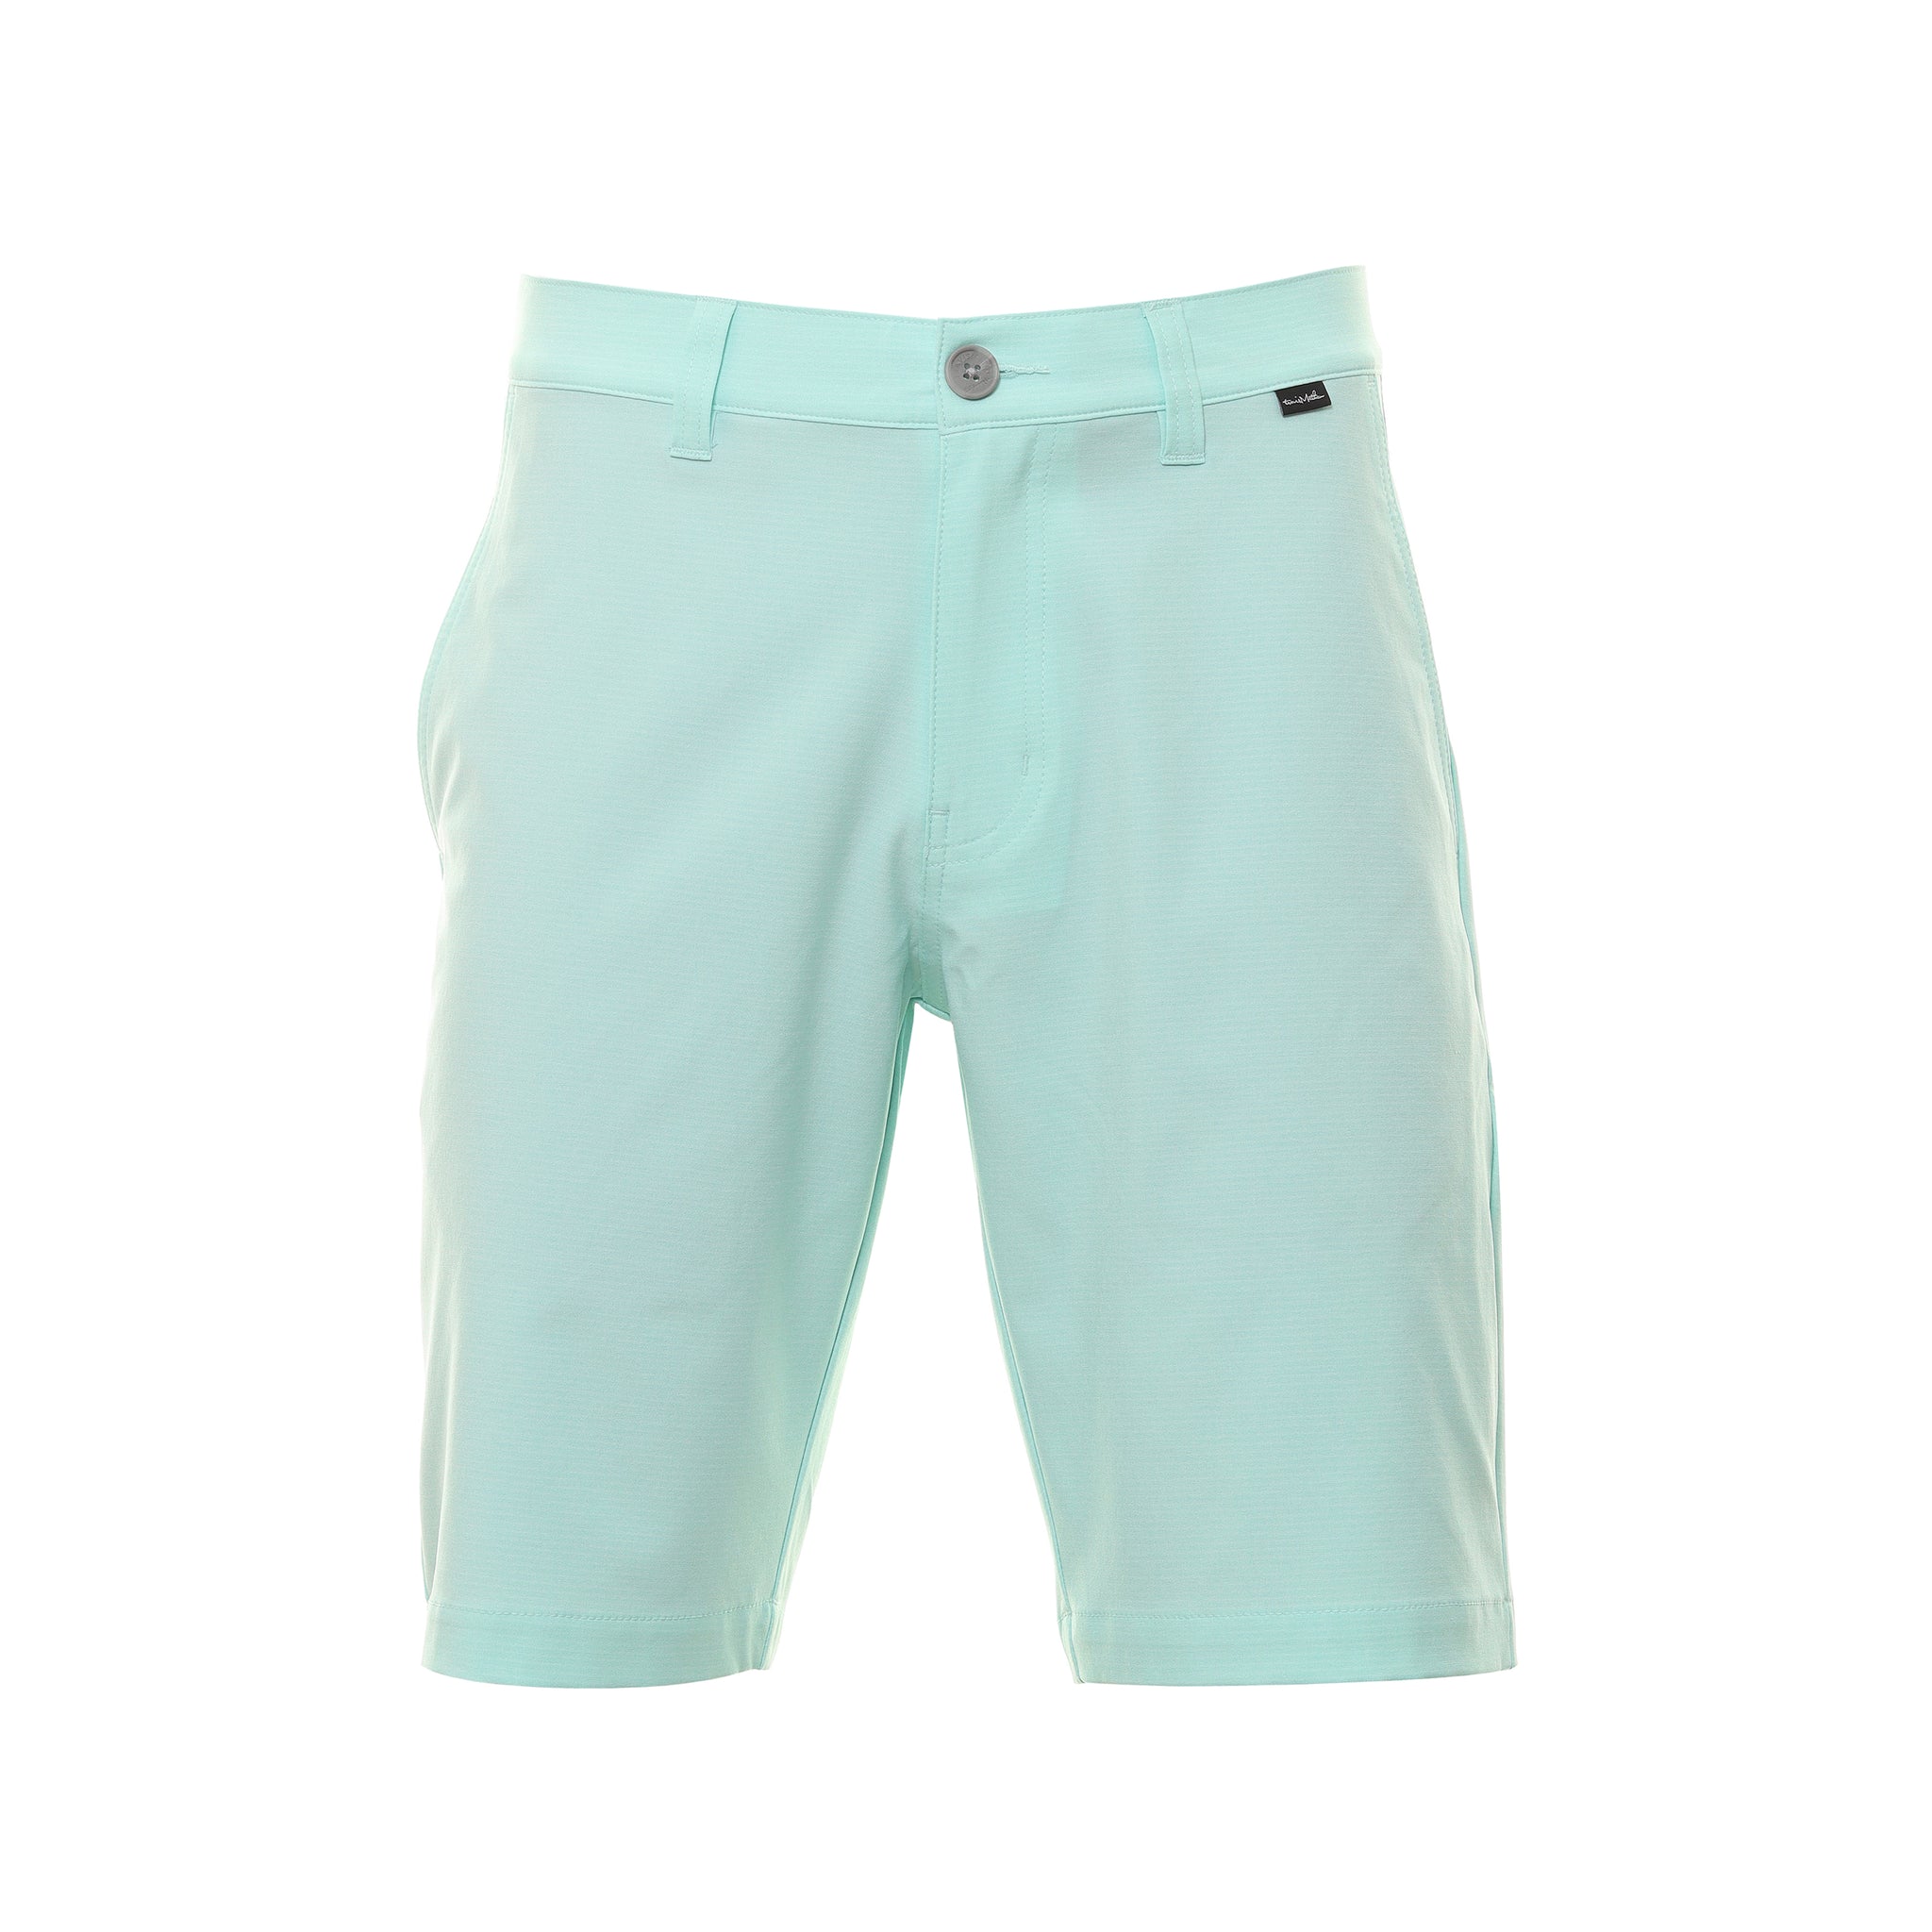 travismathew-sand-harbour-shorts-1mw397-heather-turquoise